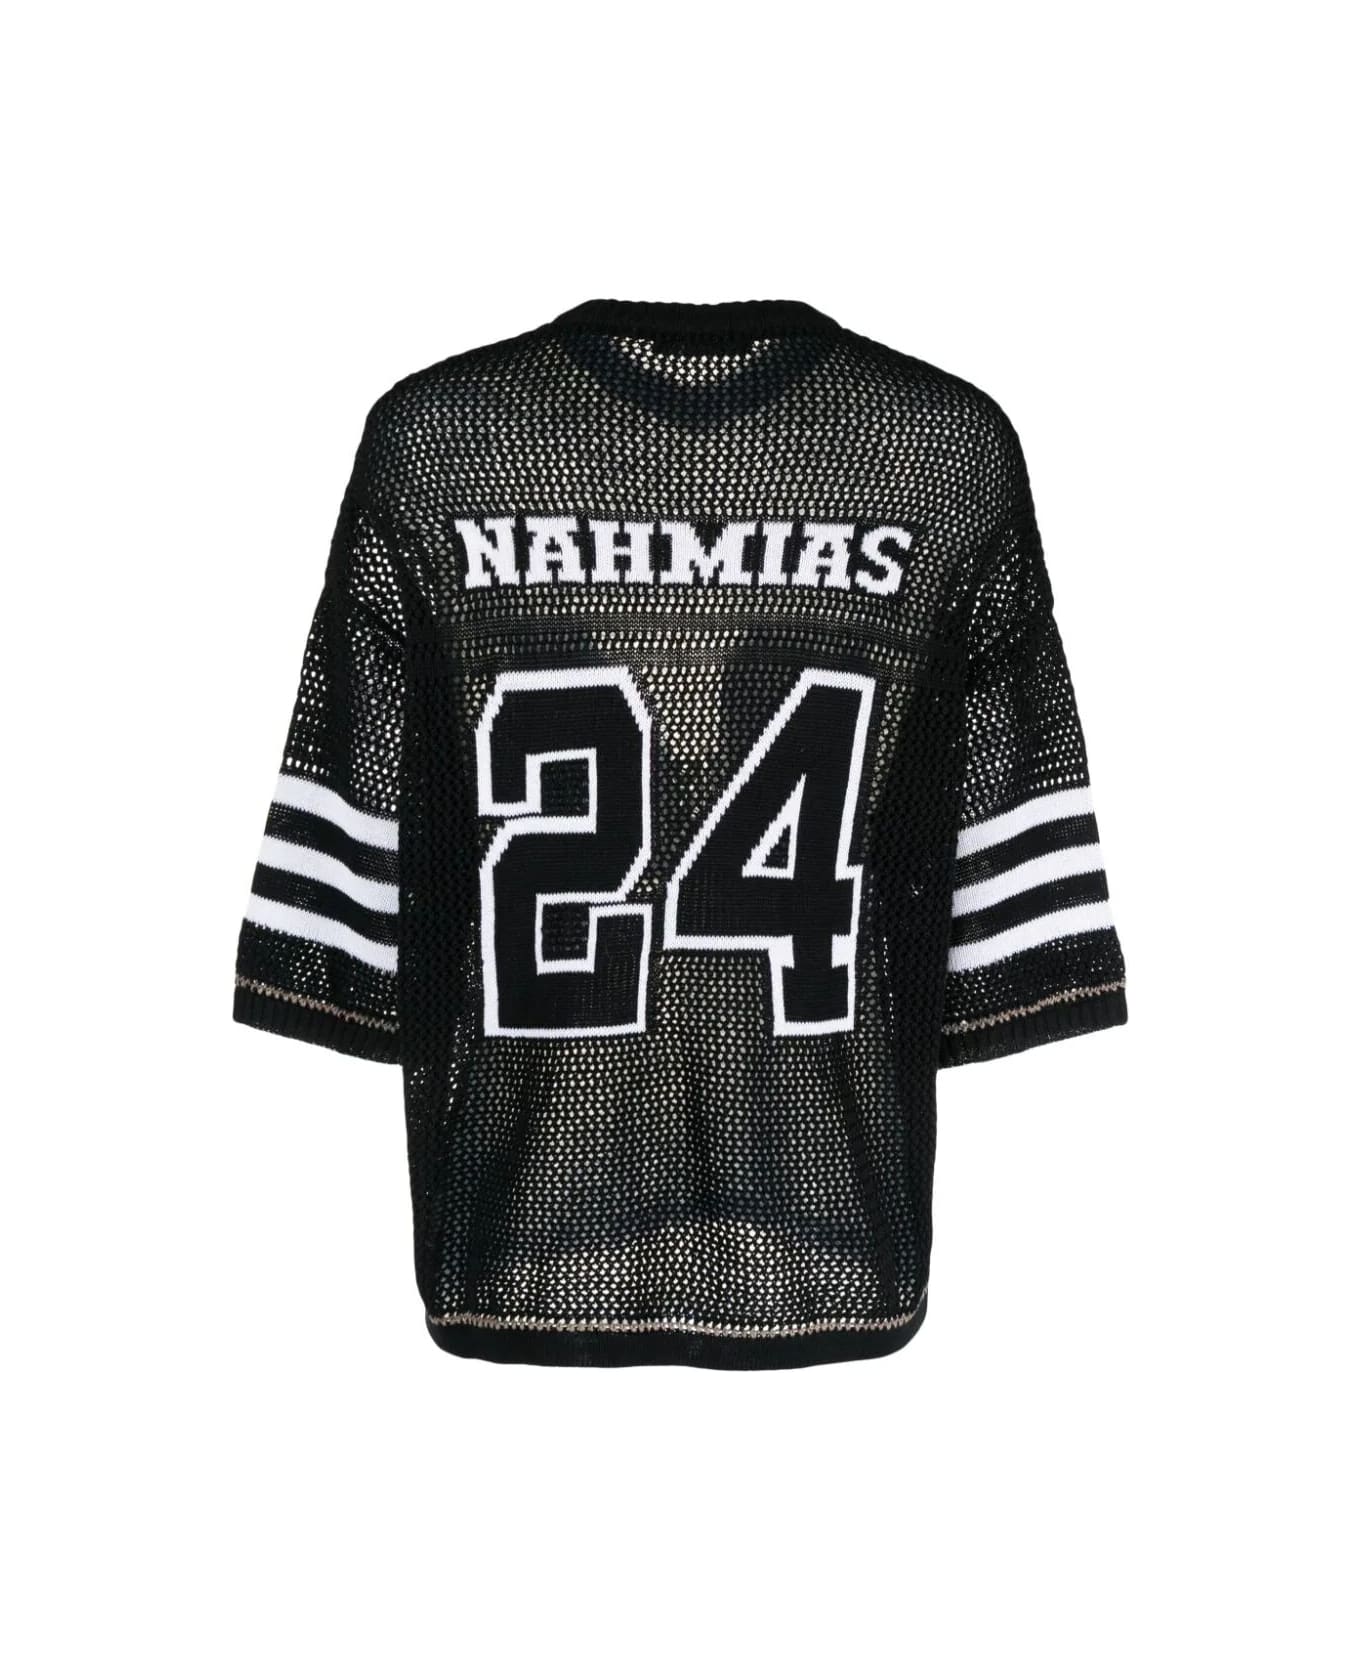 Nahmias Knit 24 Football Shirt - Black